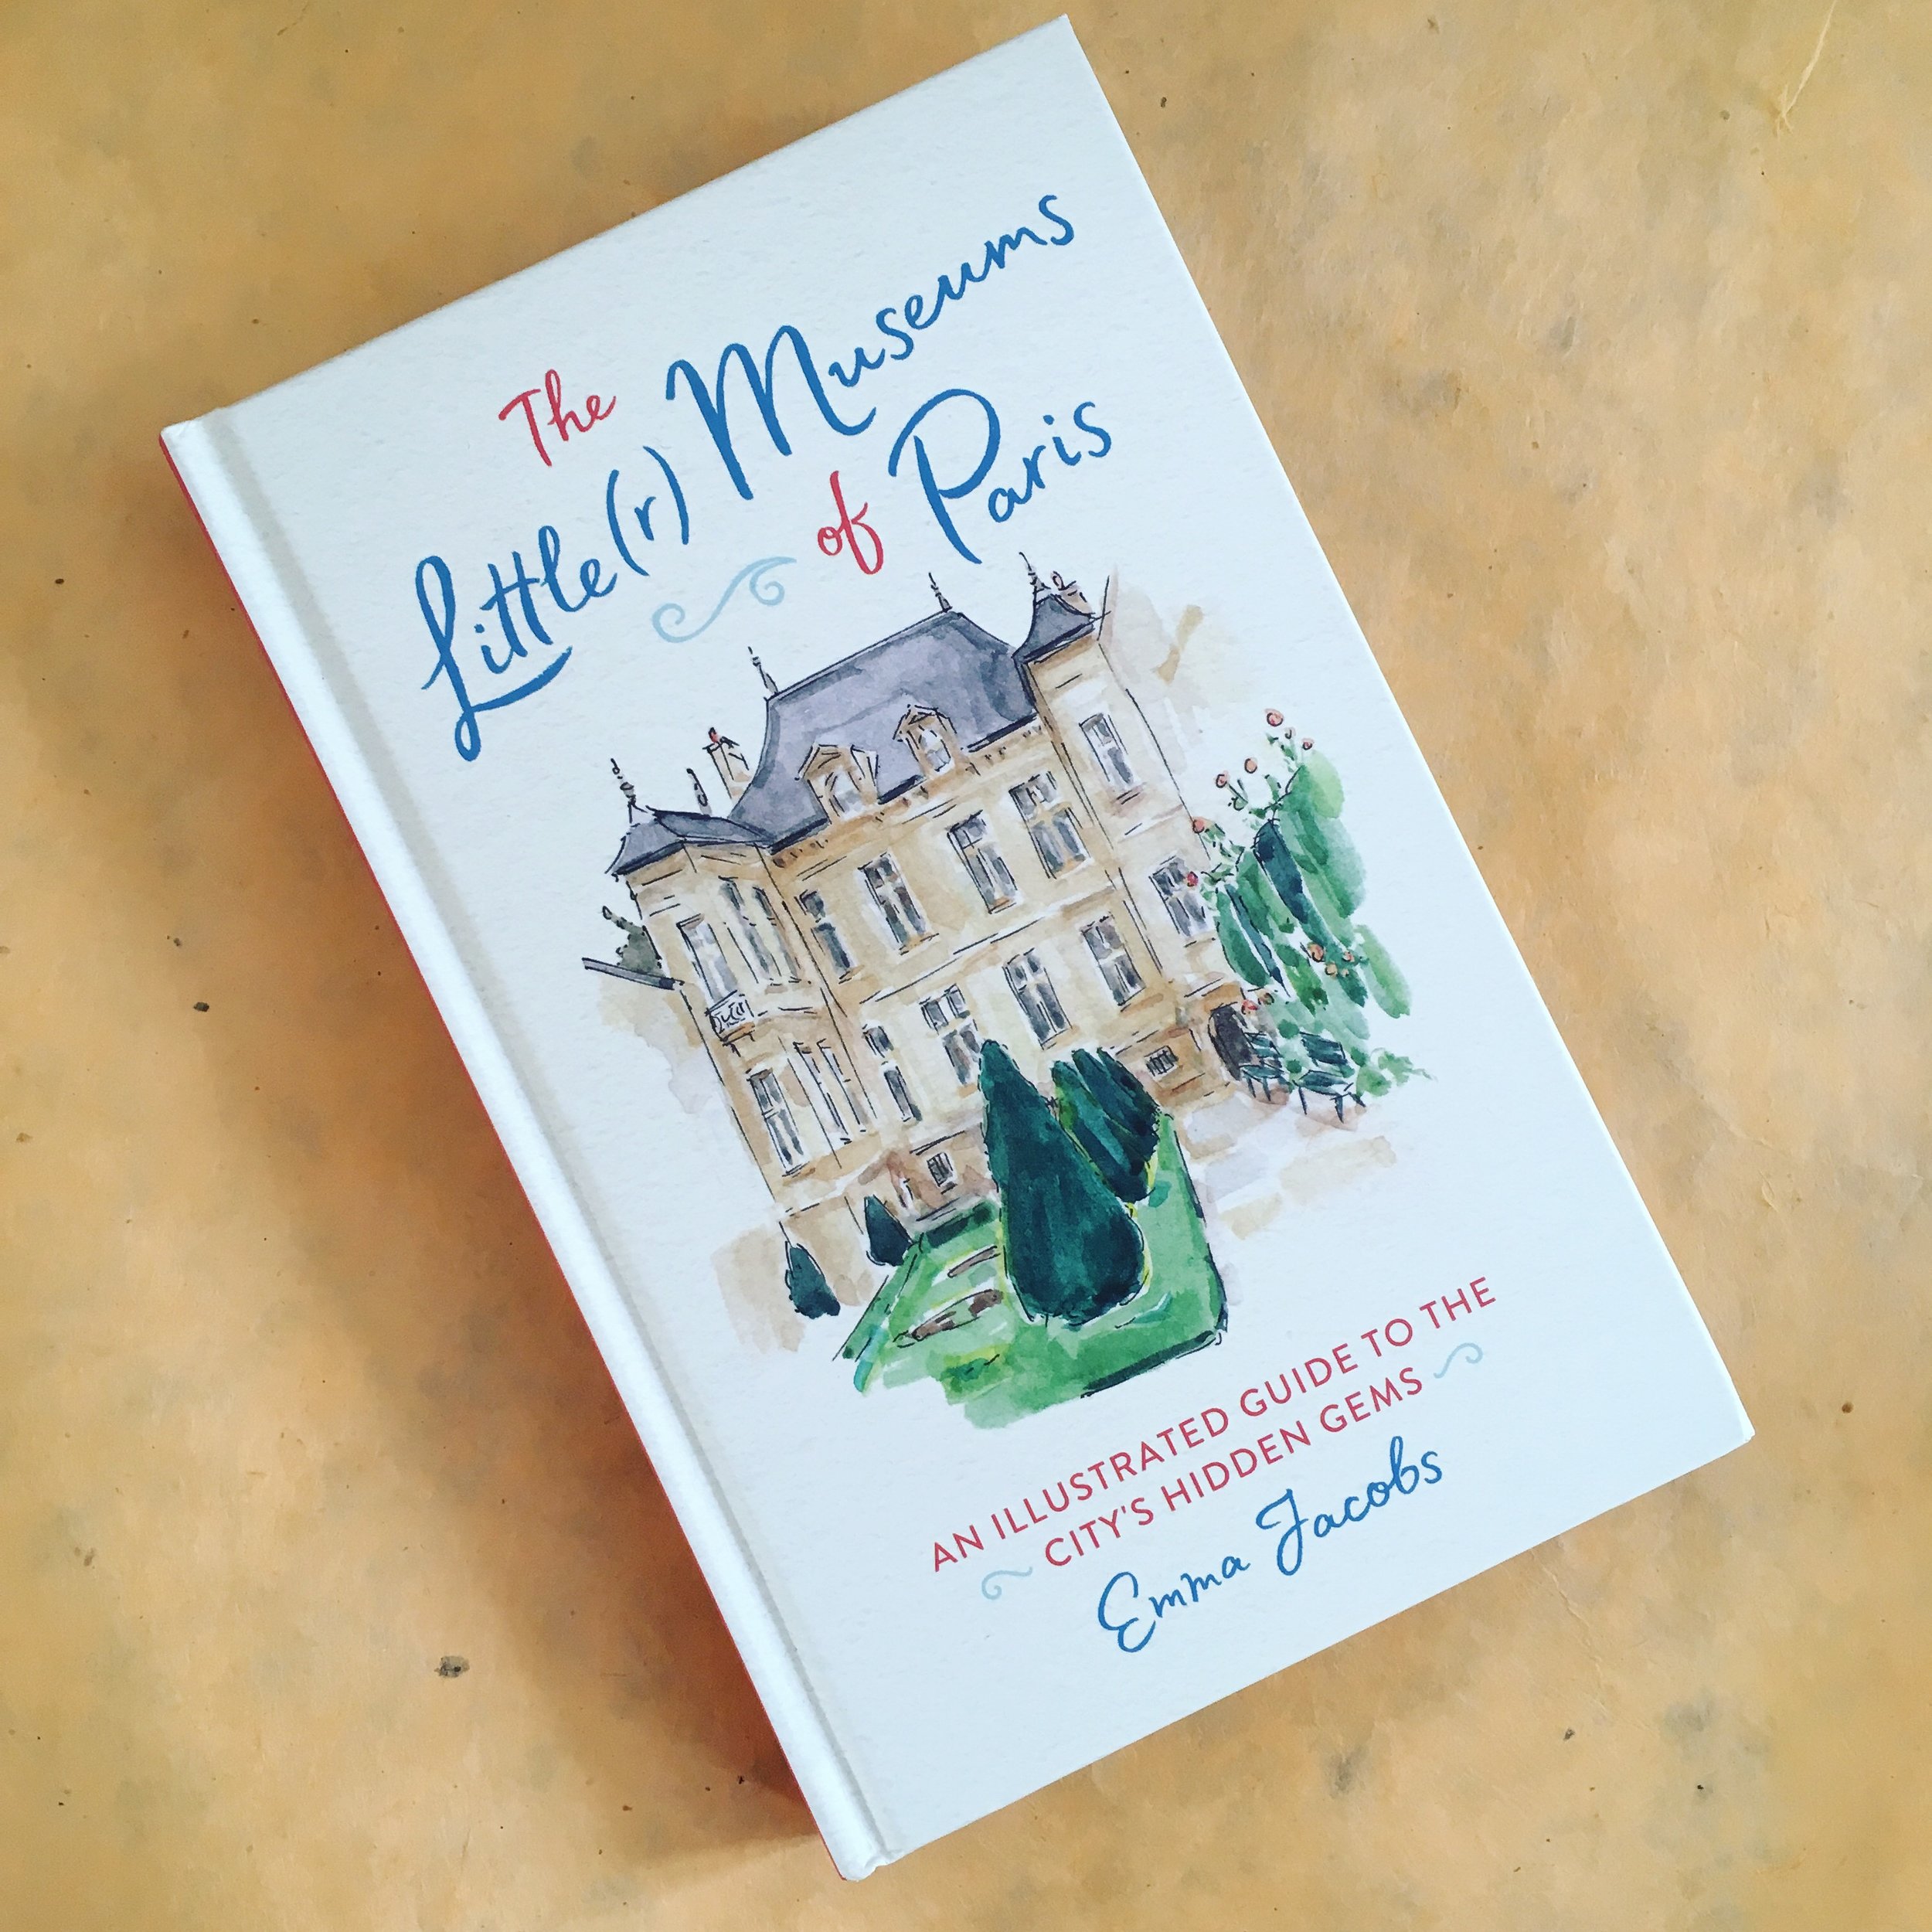 The Little(r) Museums of Paris (Running Press, 2019)